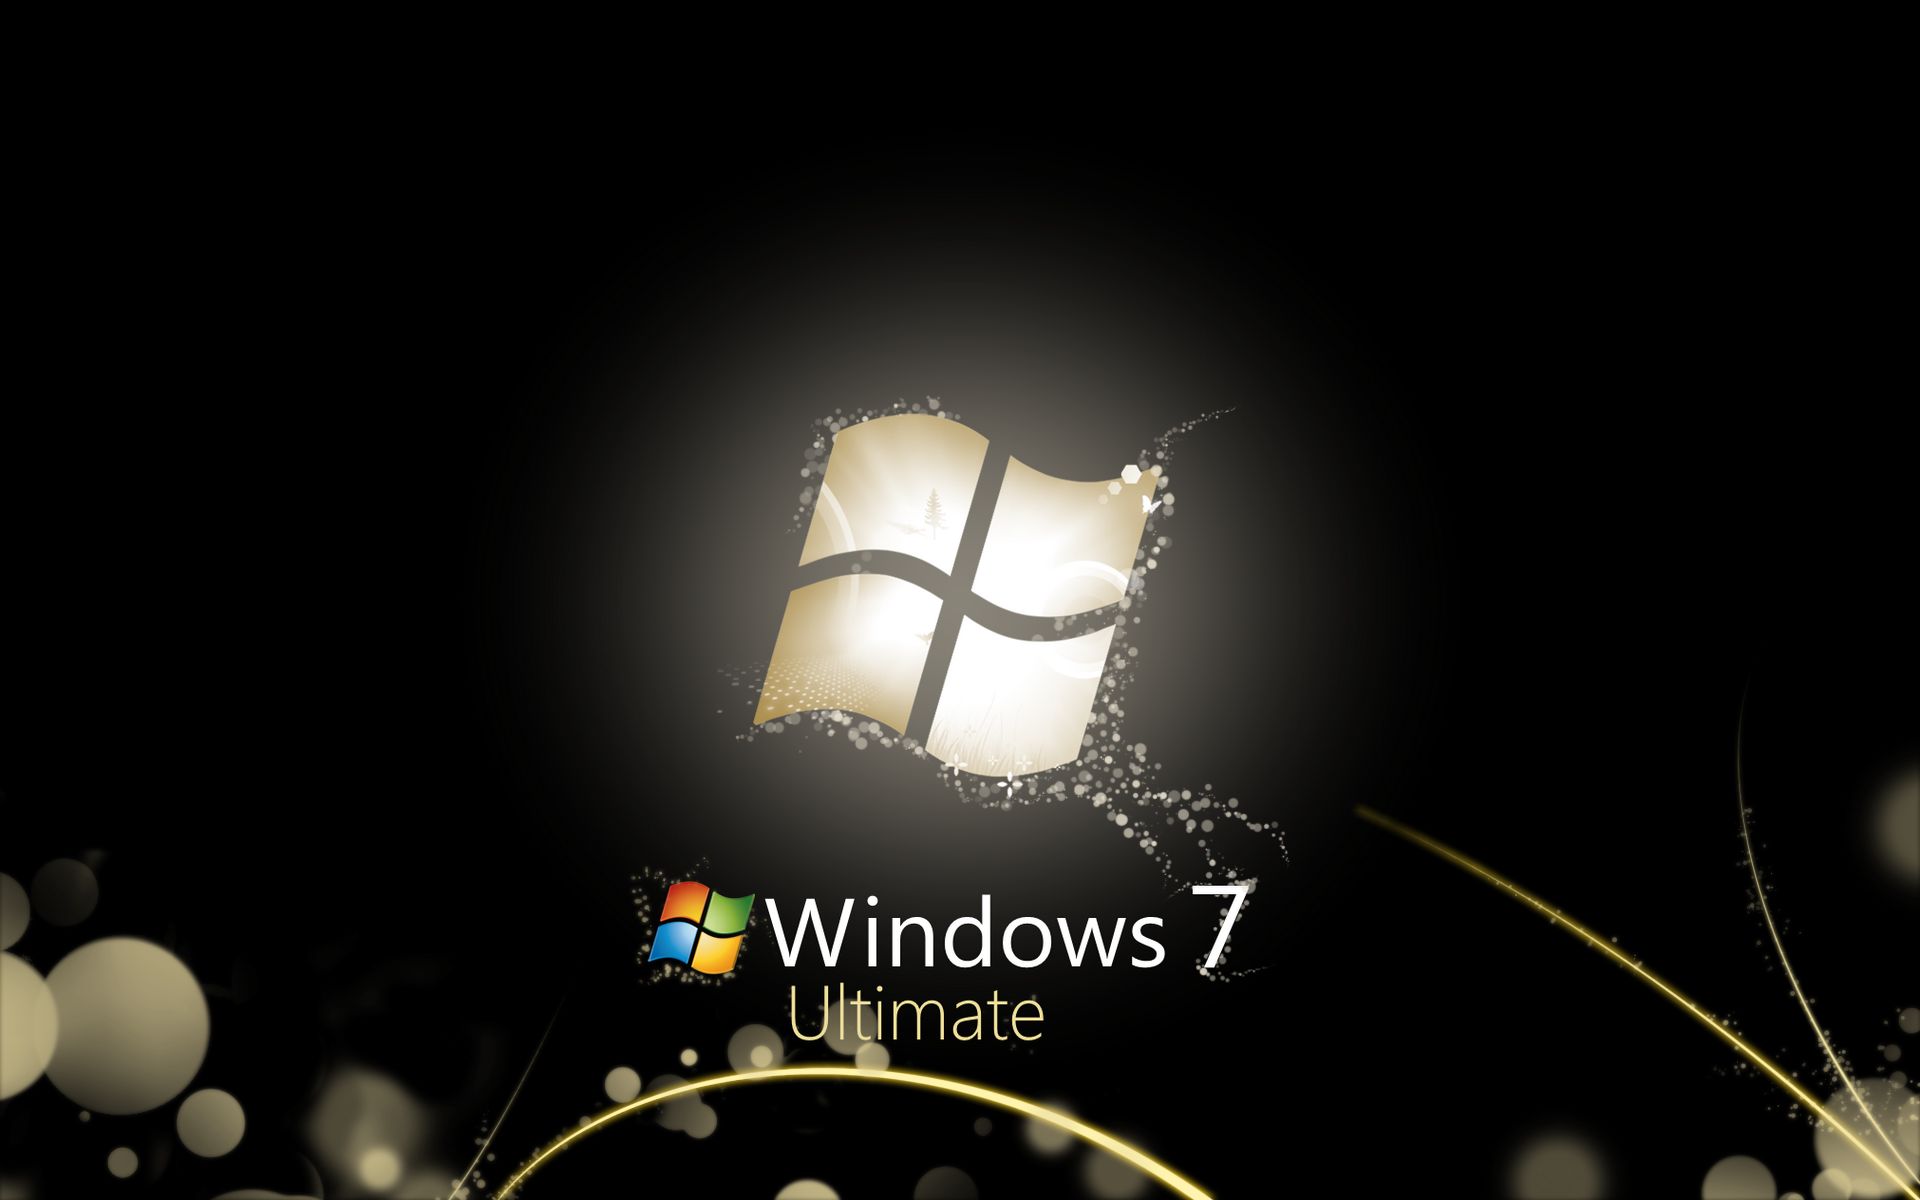 windows ultimate, windows, windows 7, microsoft, technology, windows 7 ultimate Phone Background